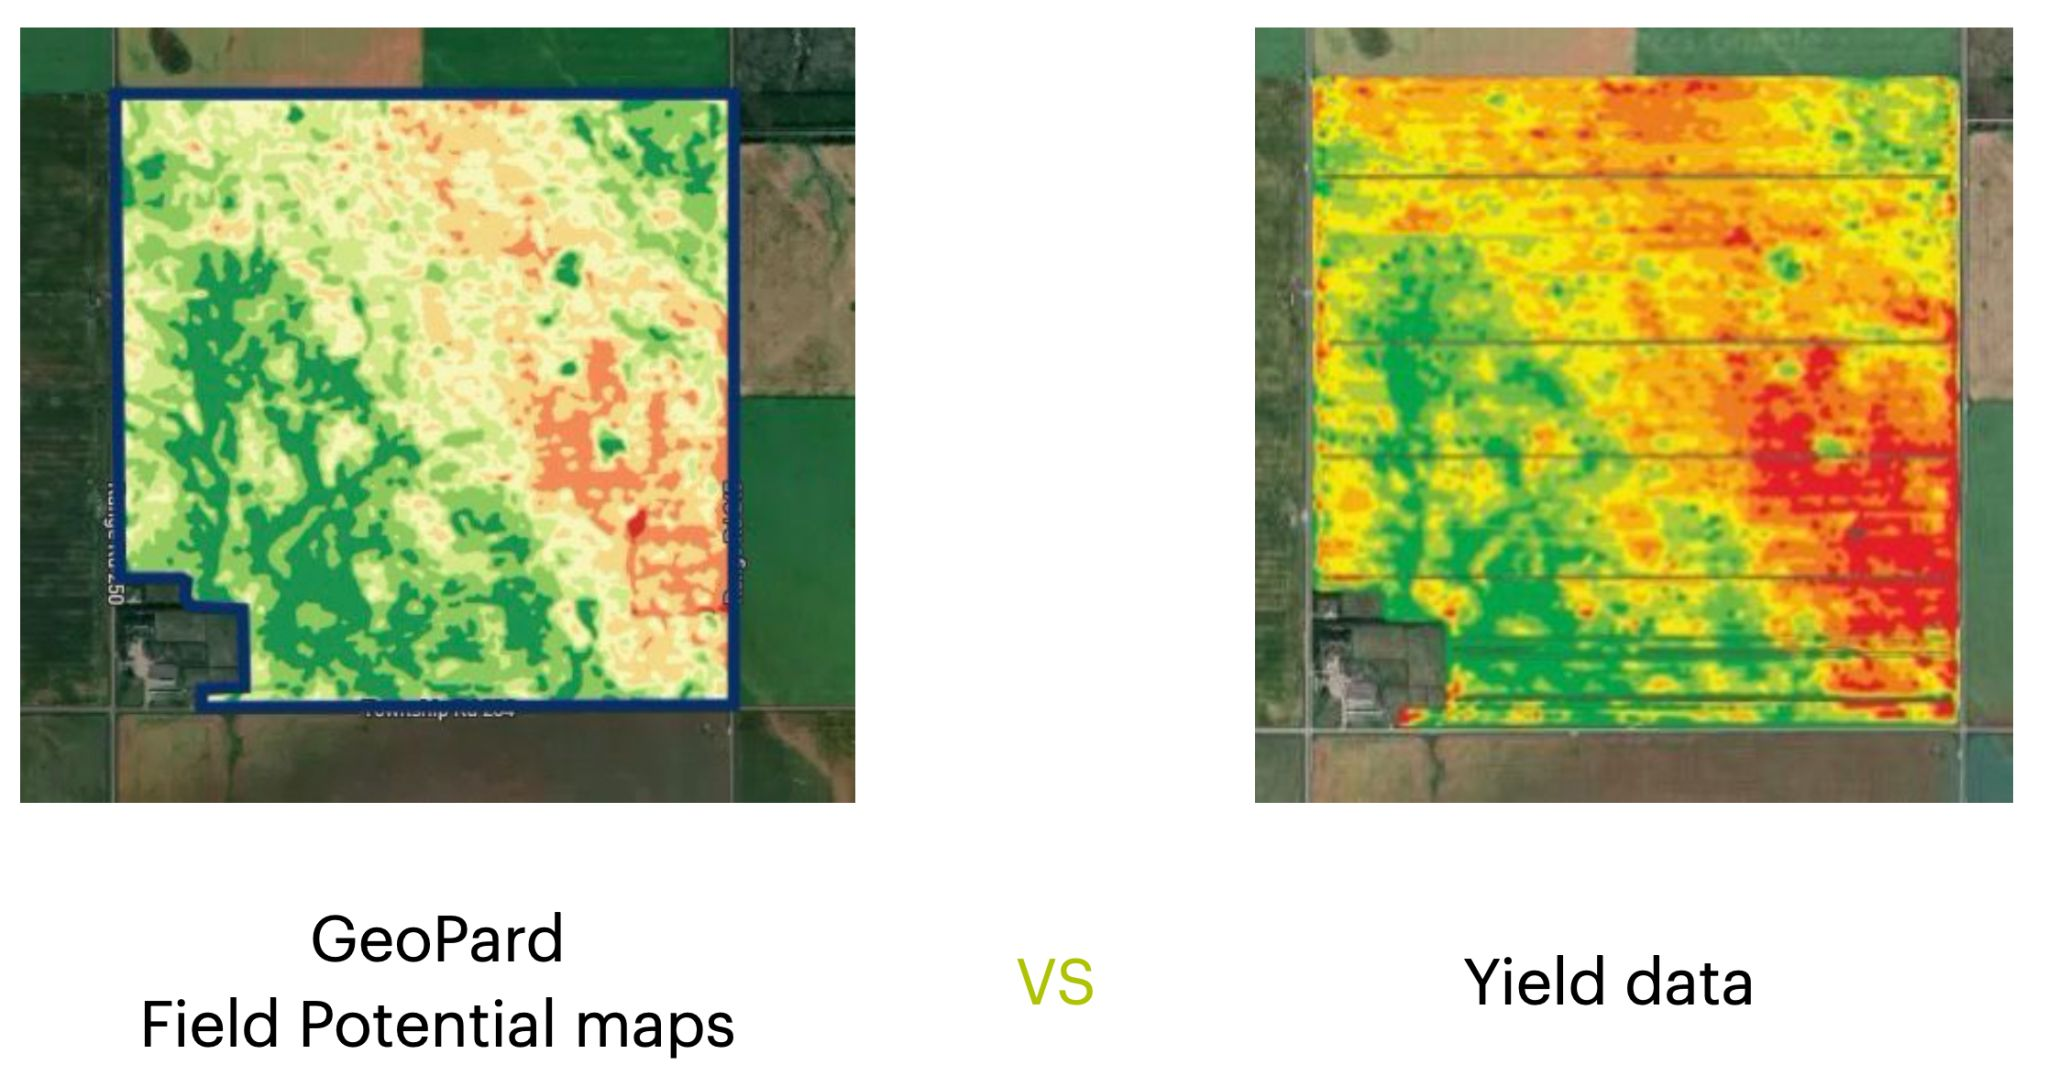 GeoPard Field Potential maps vs Yield data